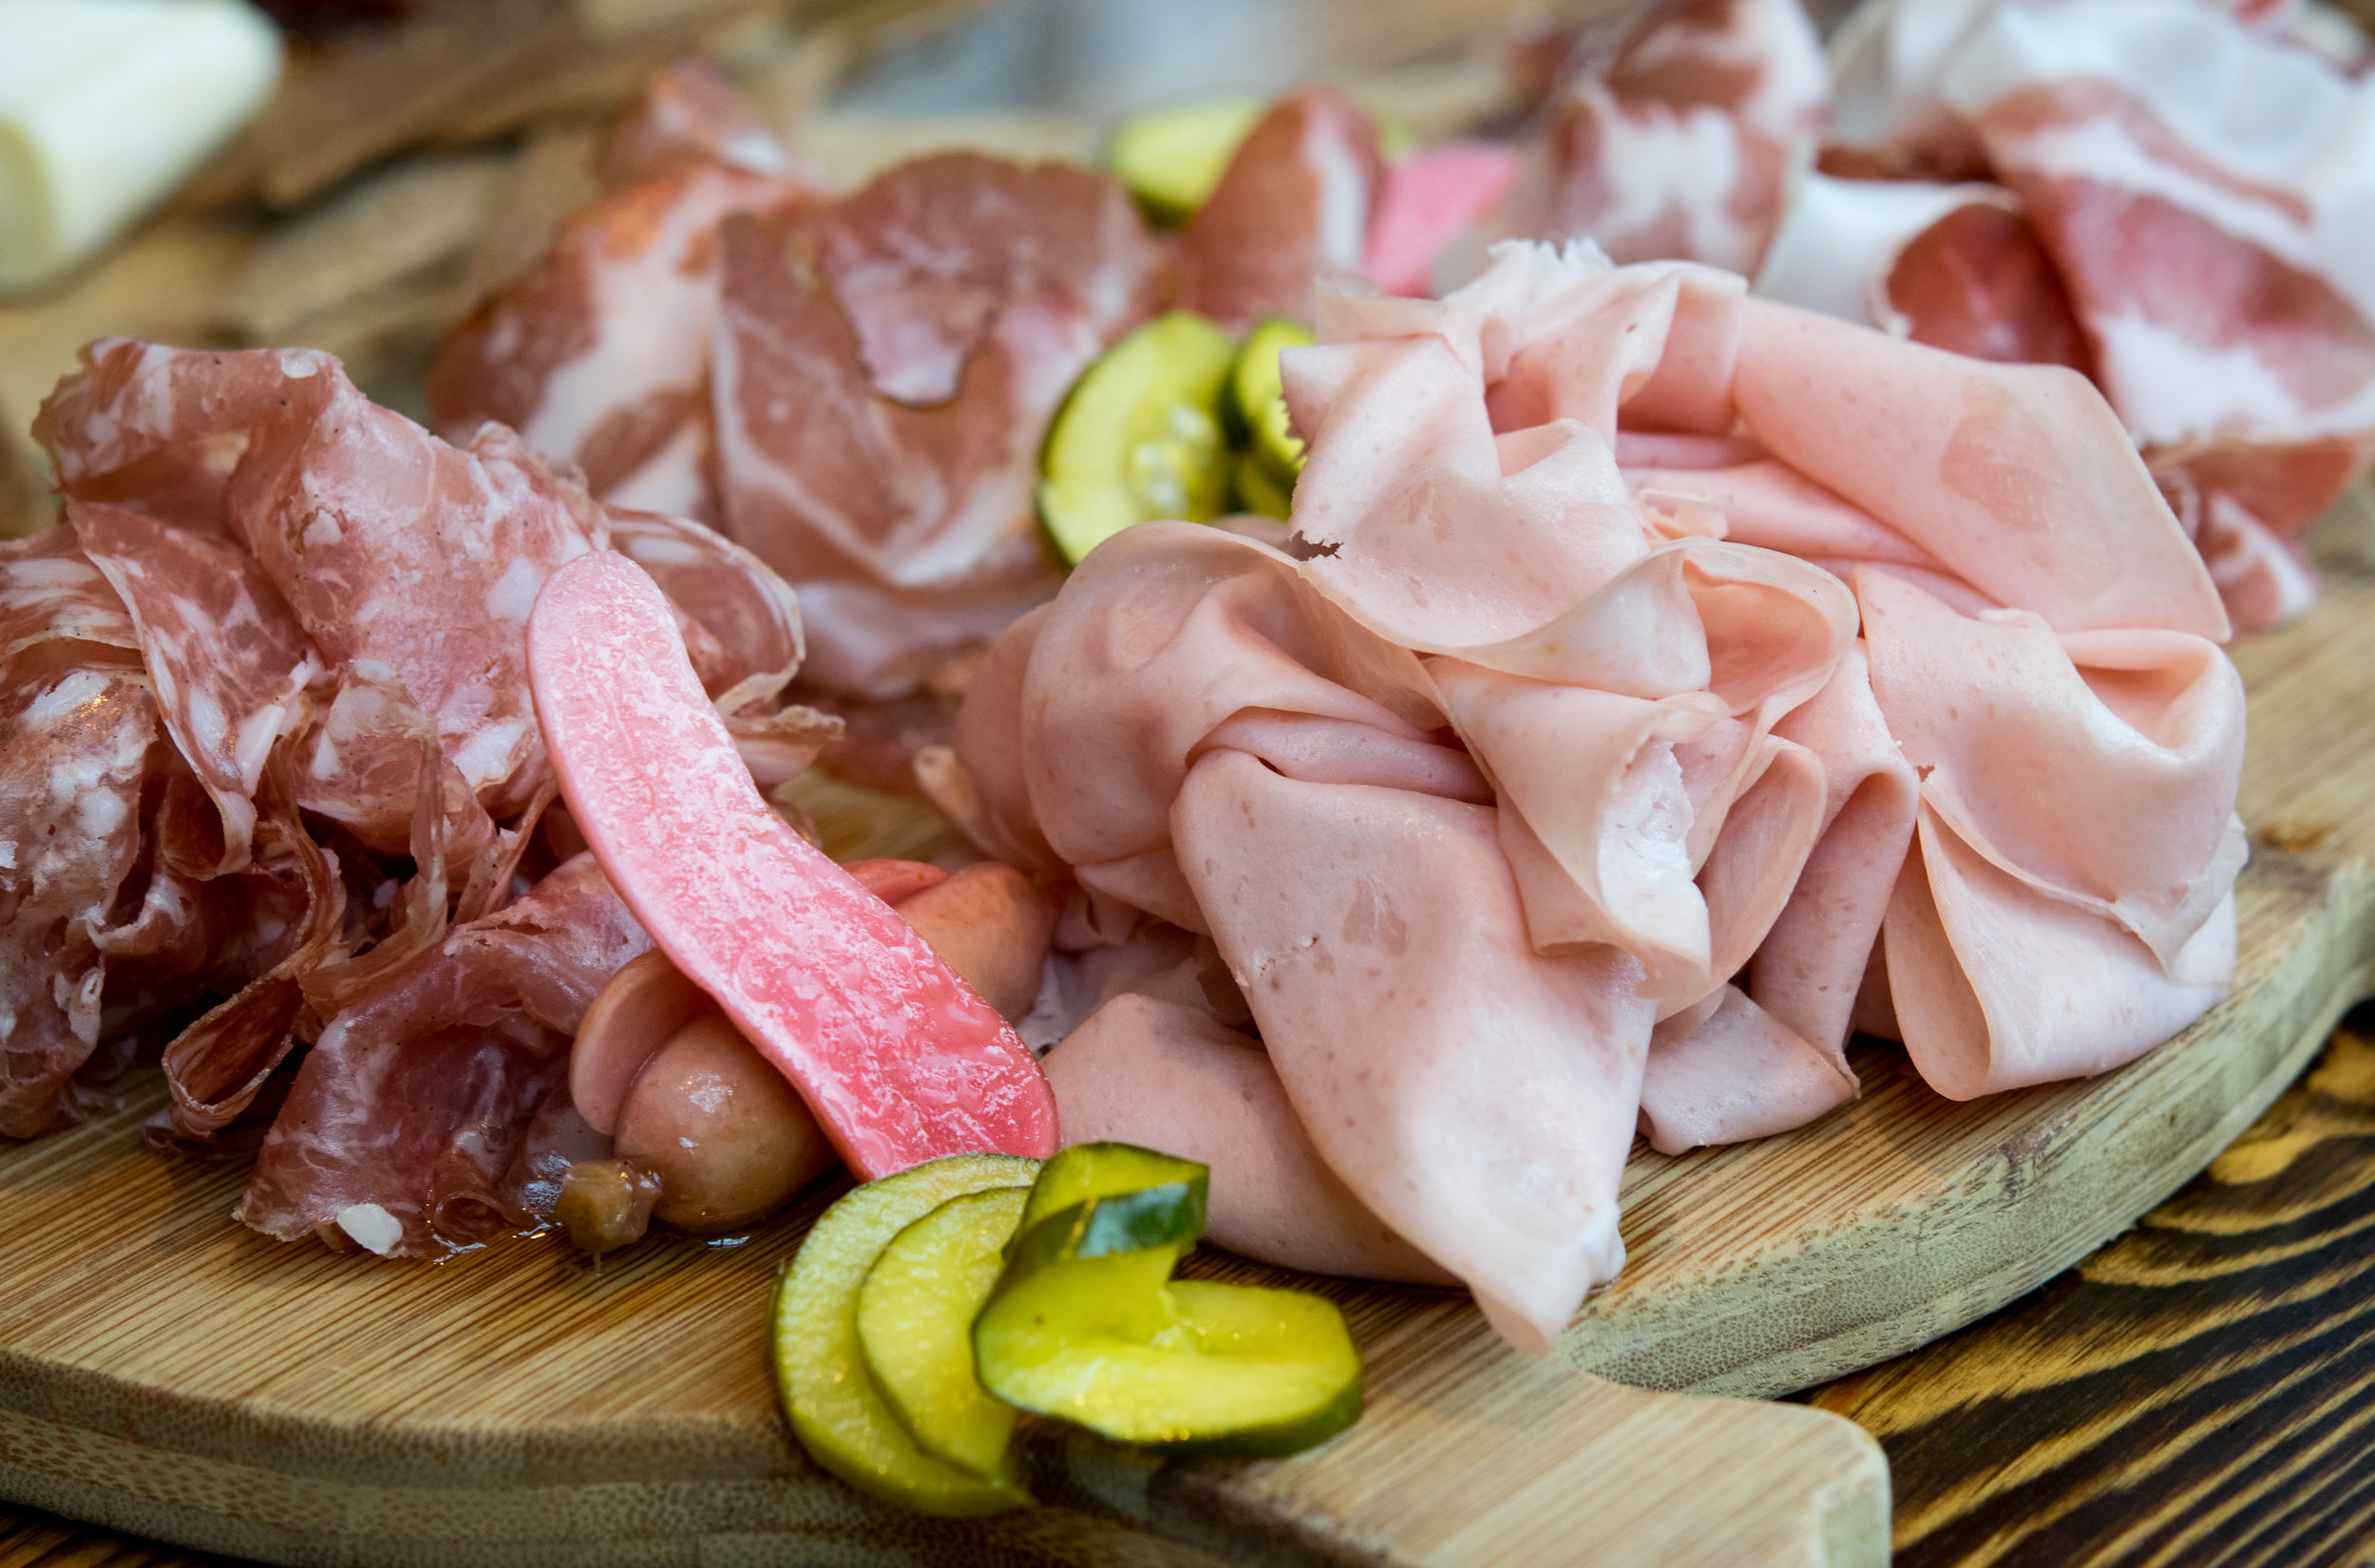 Coppa Italian Meat / Salumi Artisan Cured Meats Cured Meats Cured Meat